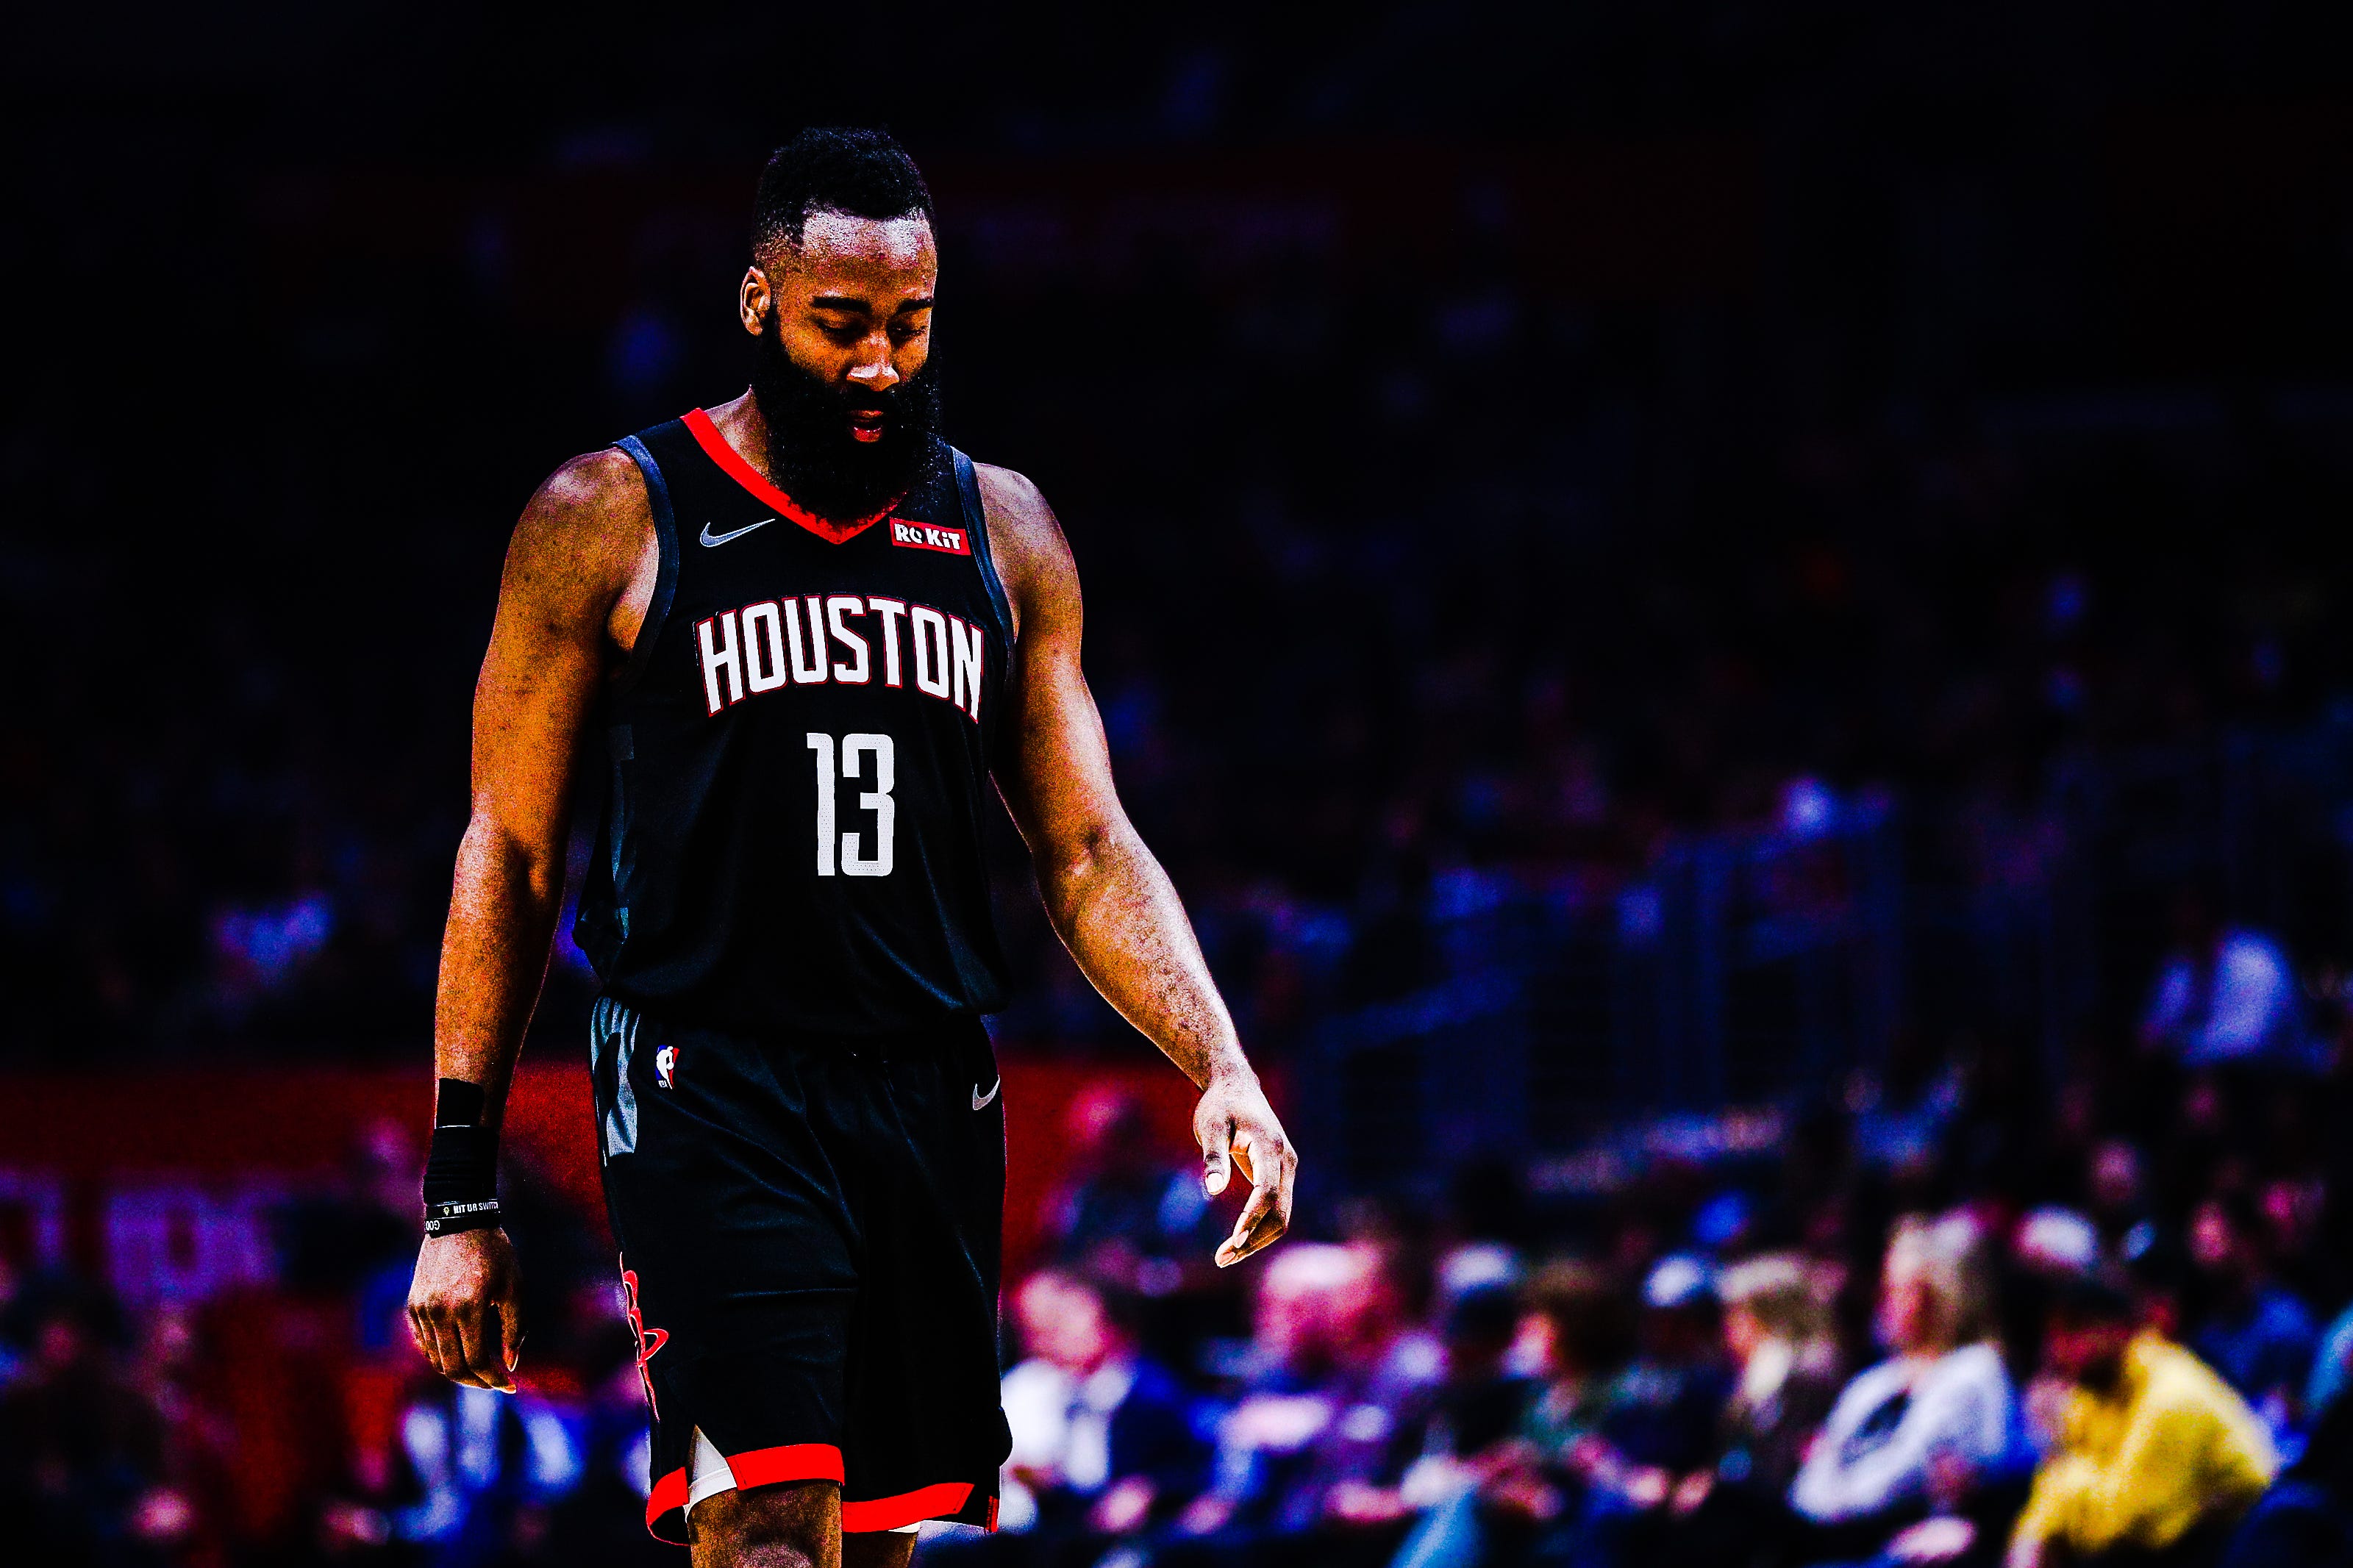 Rockets star James Harden arrives in Houston after delay